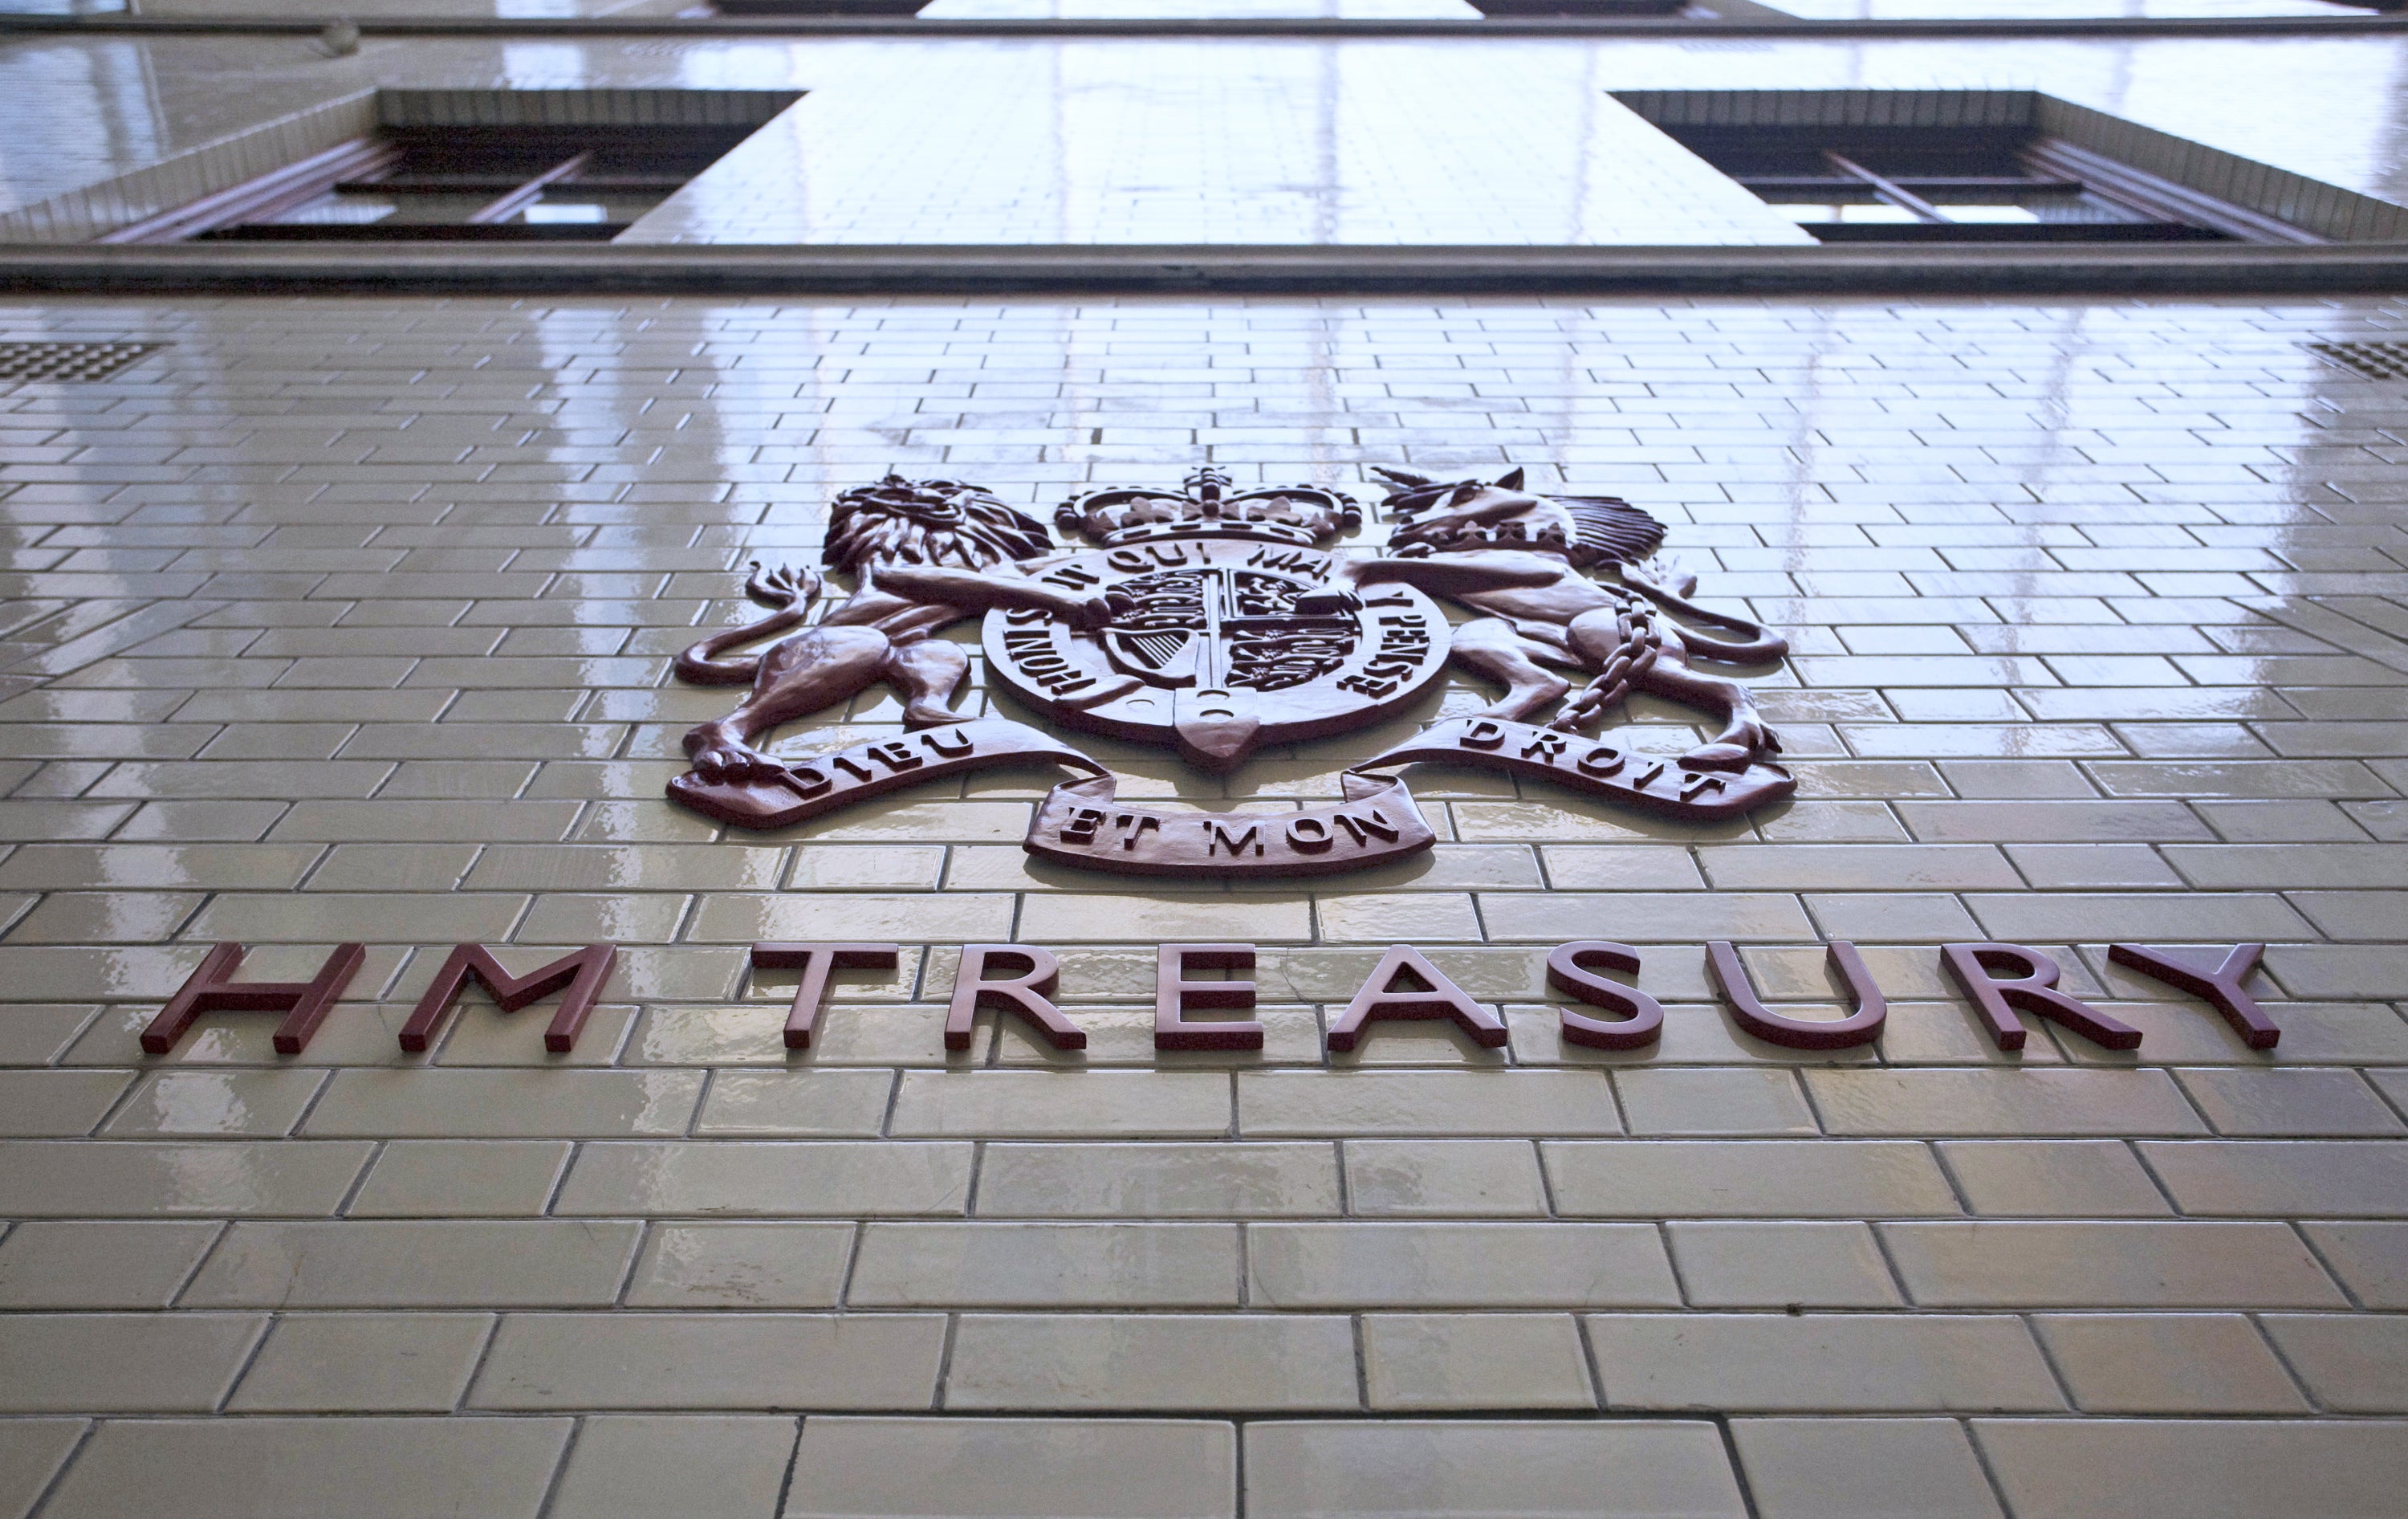 An HM Treasury sign